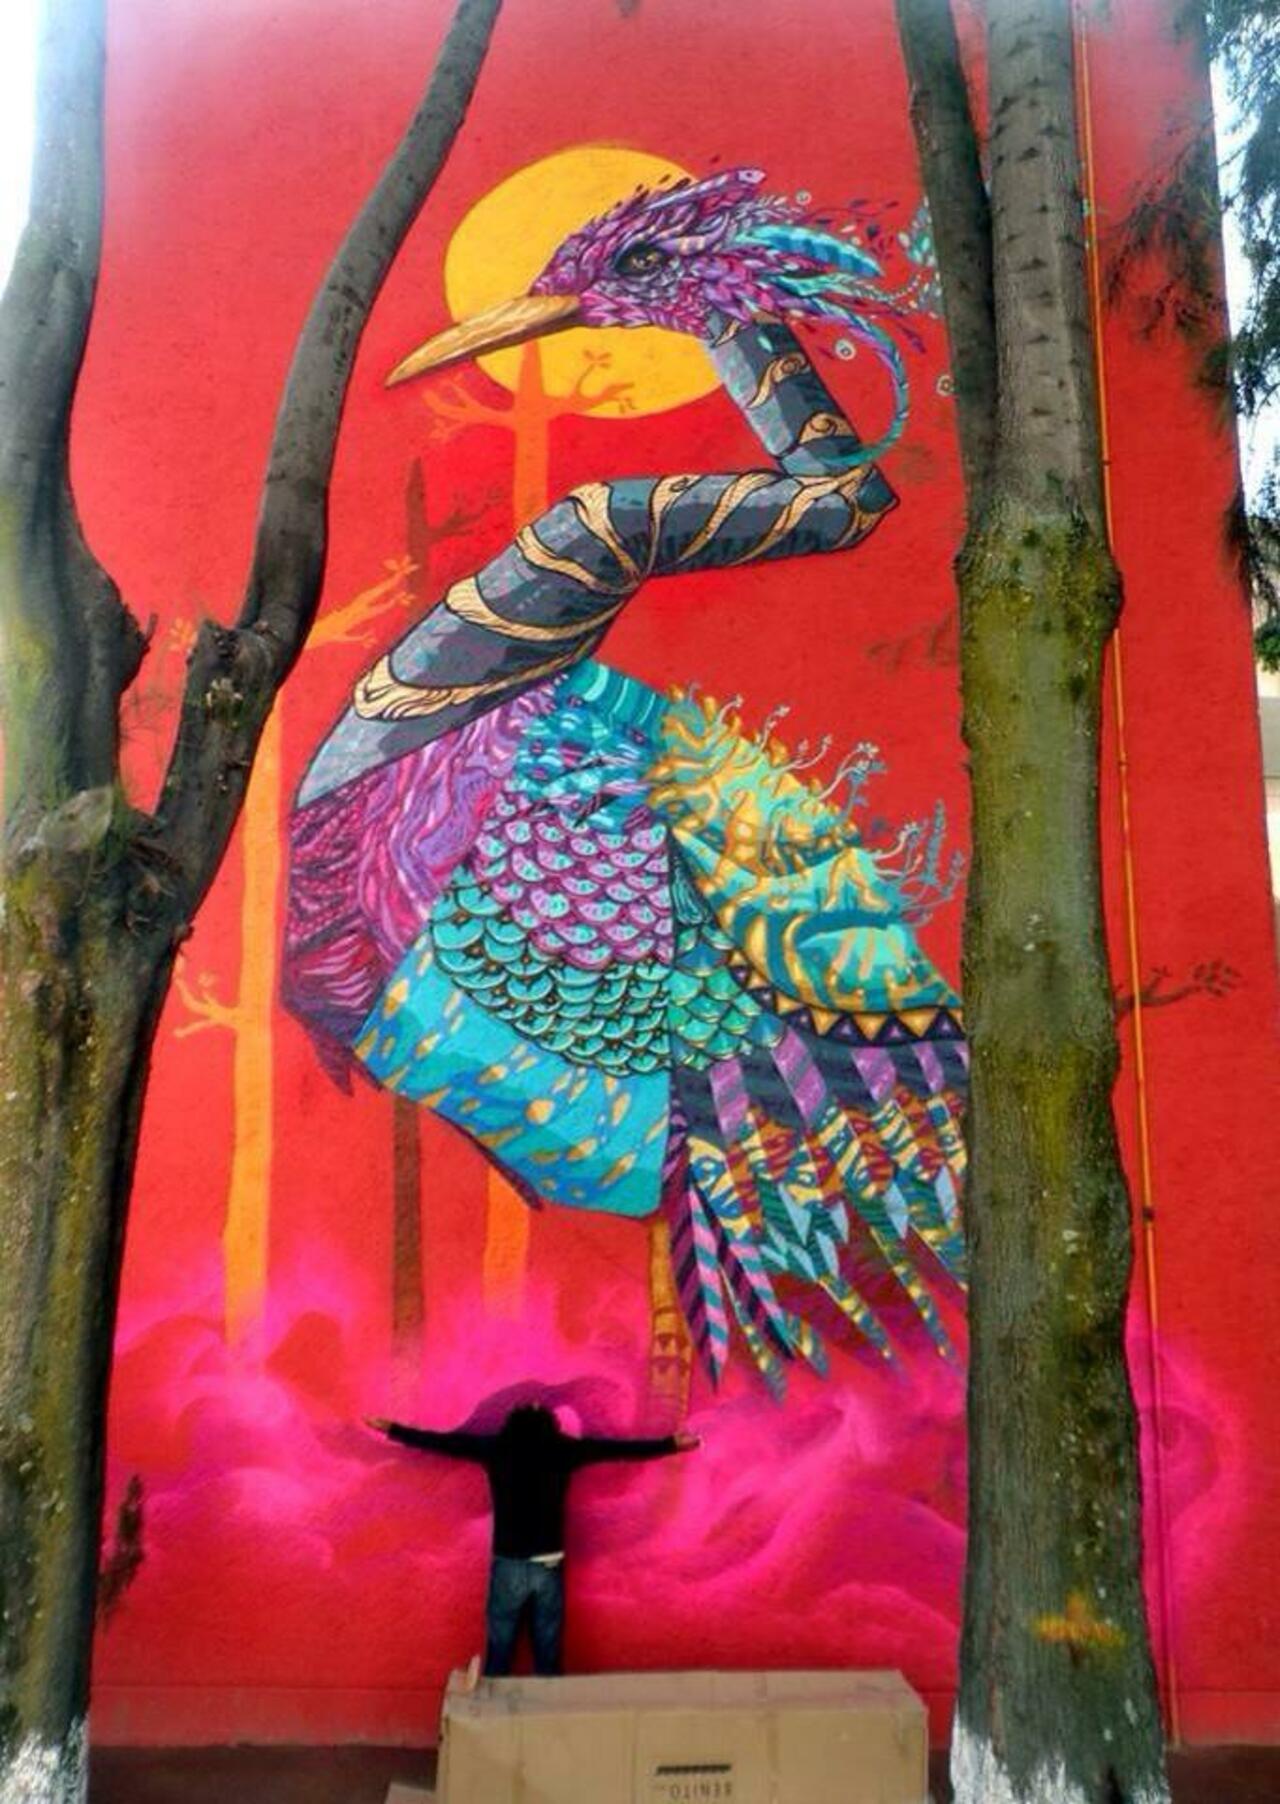 'Songs of Colour'

Sublime Nature in Street Art by NacHo Wm ft. Farid Rueda 

#art #arte #graffiti #streetart http://t.co/XvD30sD8ya